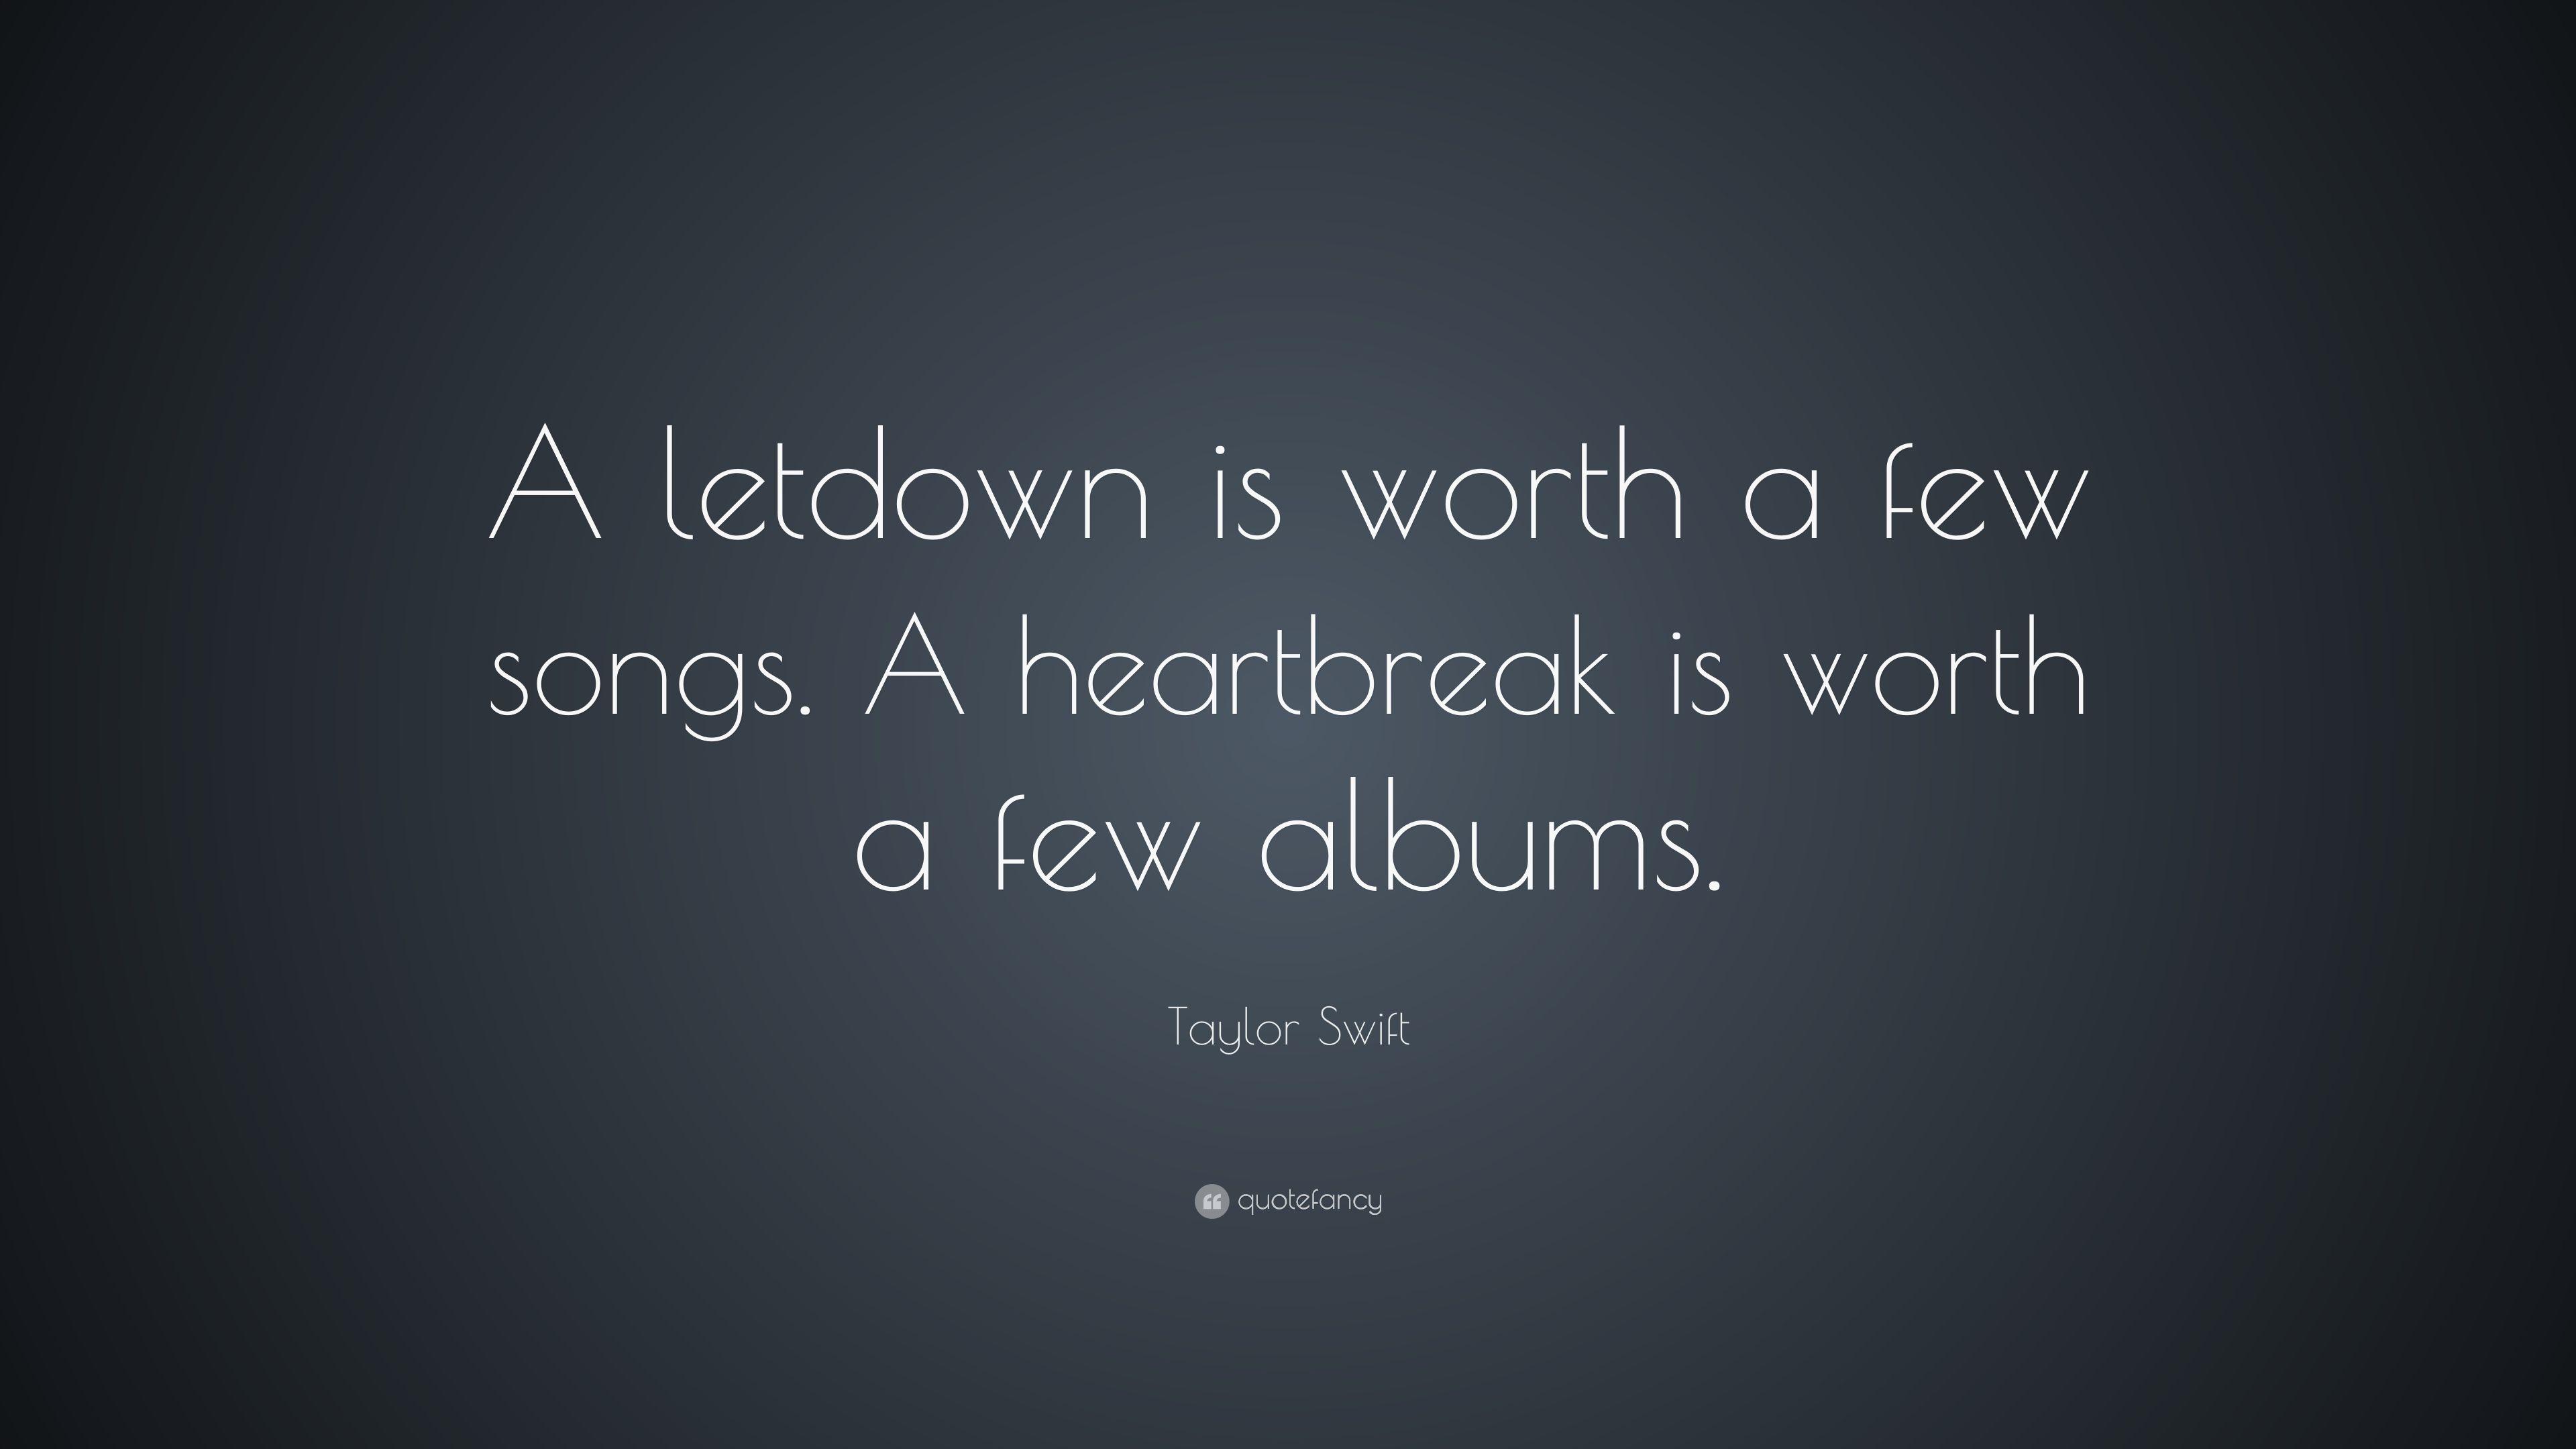 Taylor Swift Quote: “A letdown is worth a few songs. A heartbreak is